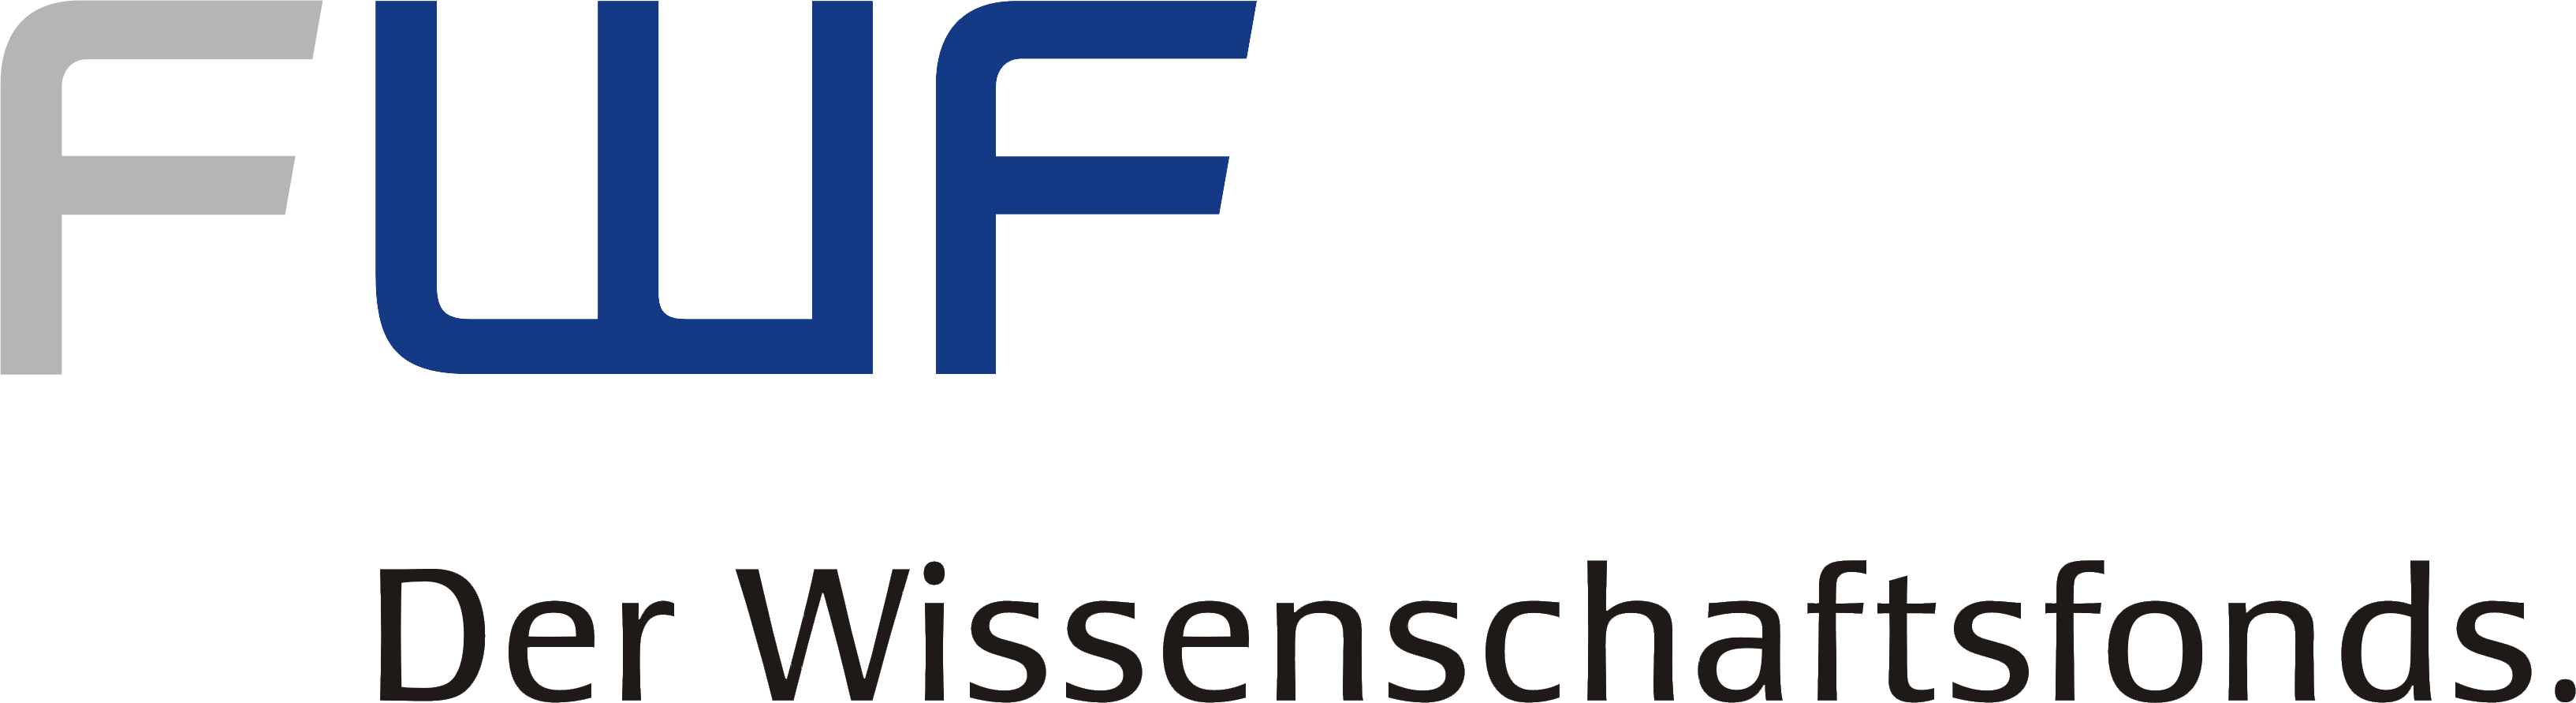 fwf-logo-color-transparent-var2